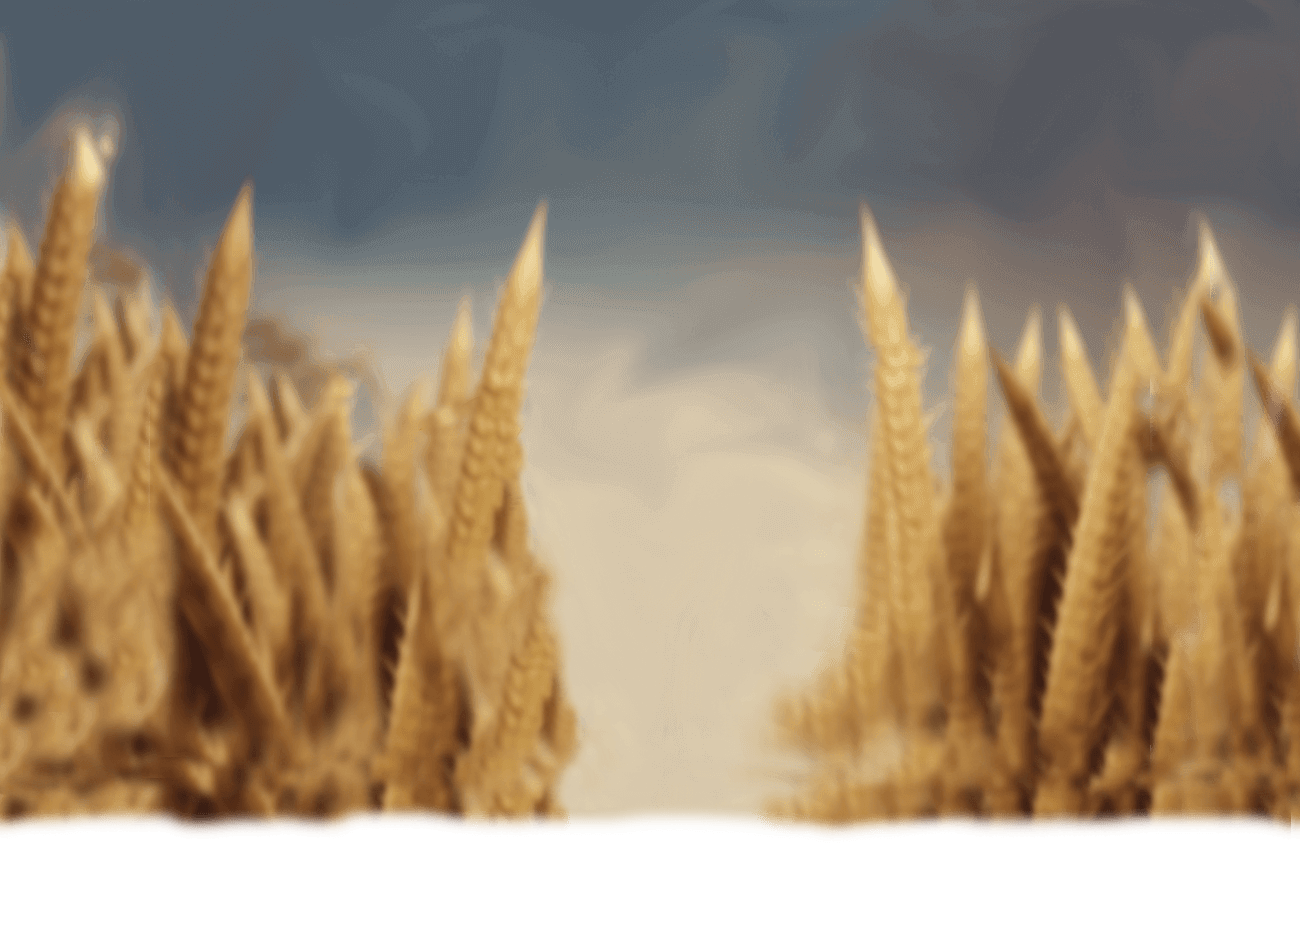 wheat background